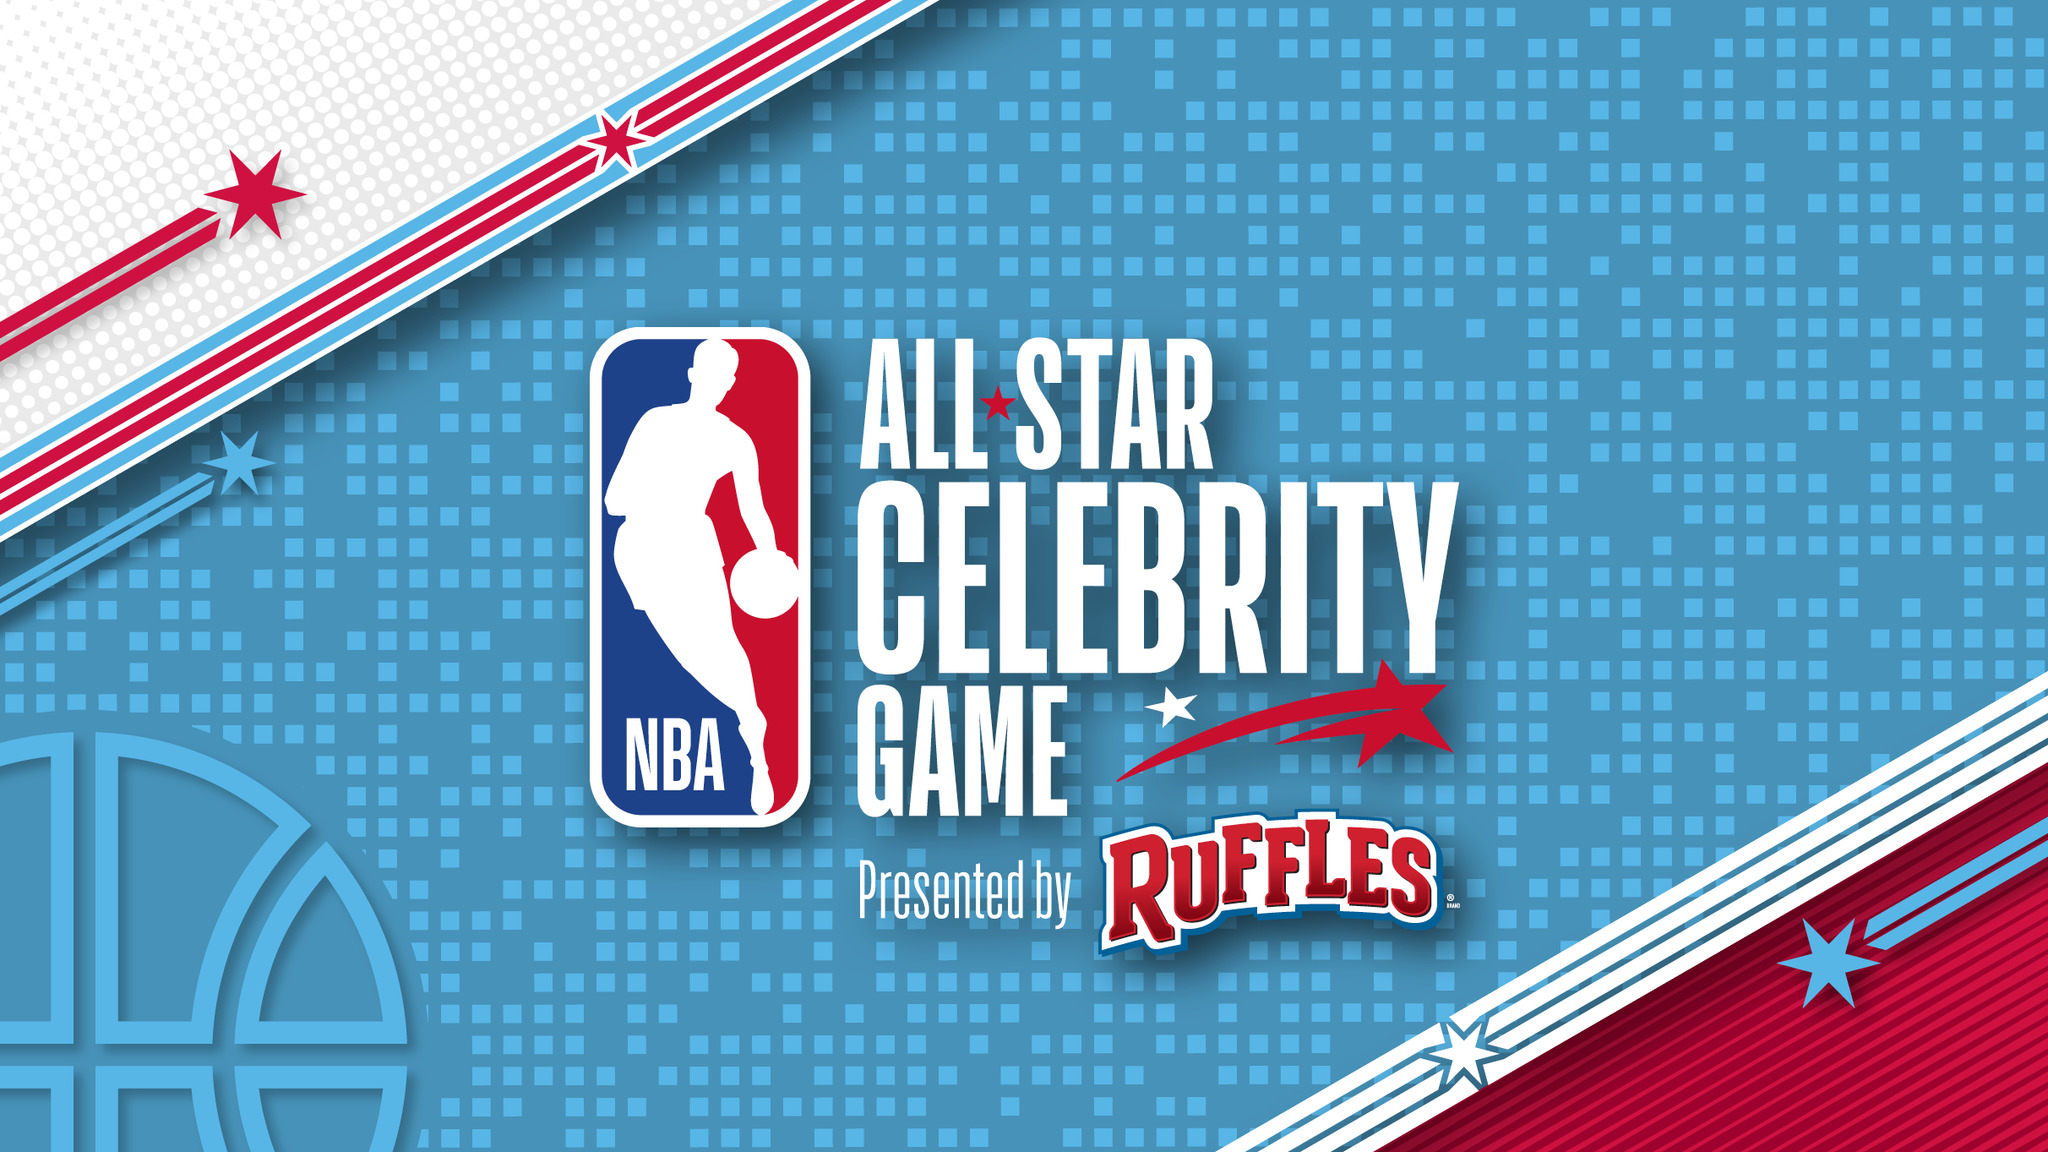 NBA AllStar Celebrity Game Tickets 2022 2023 NBA Tickets